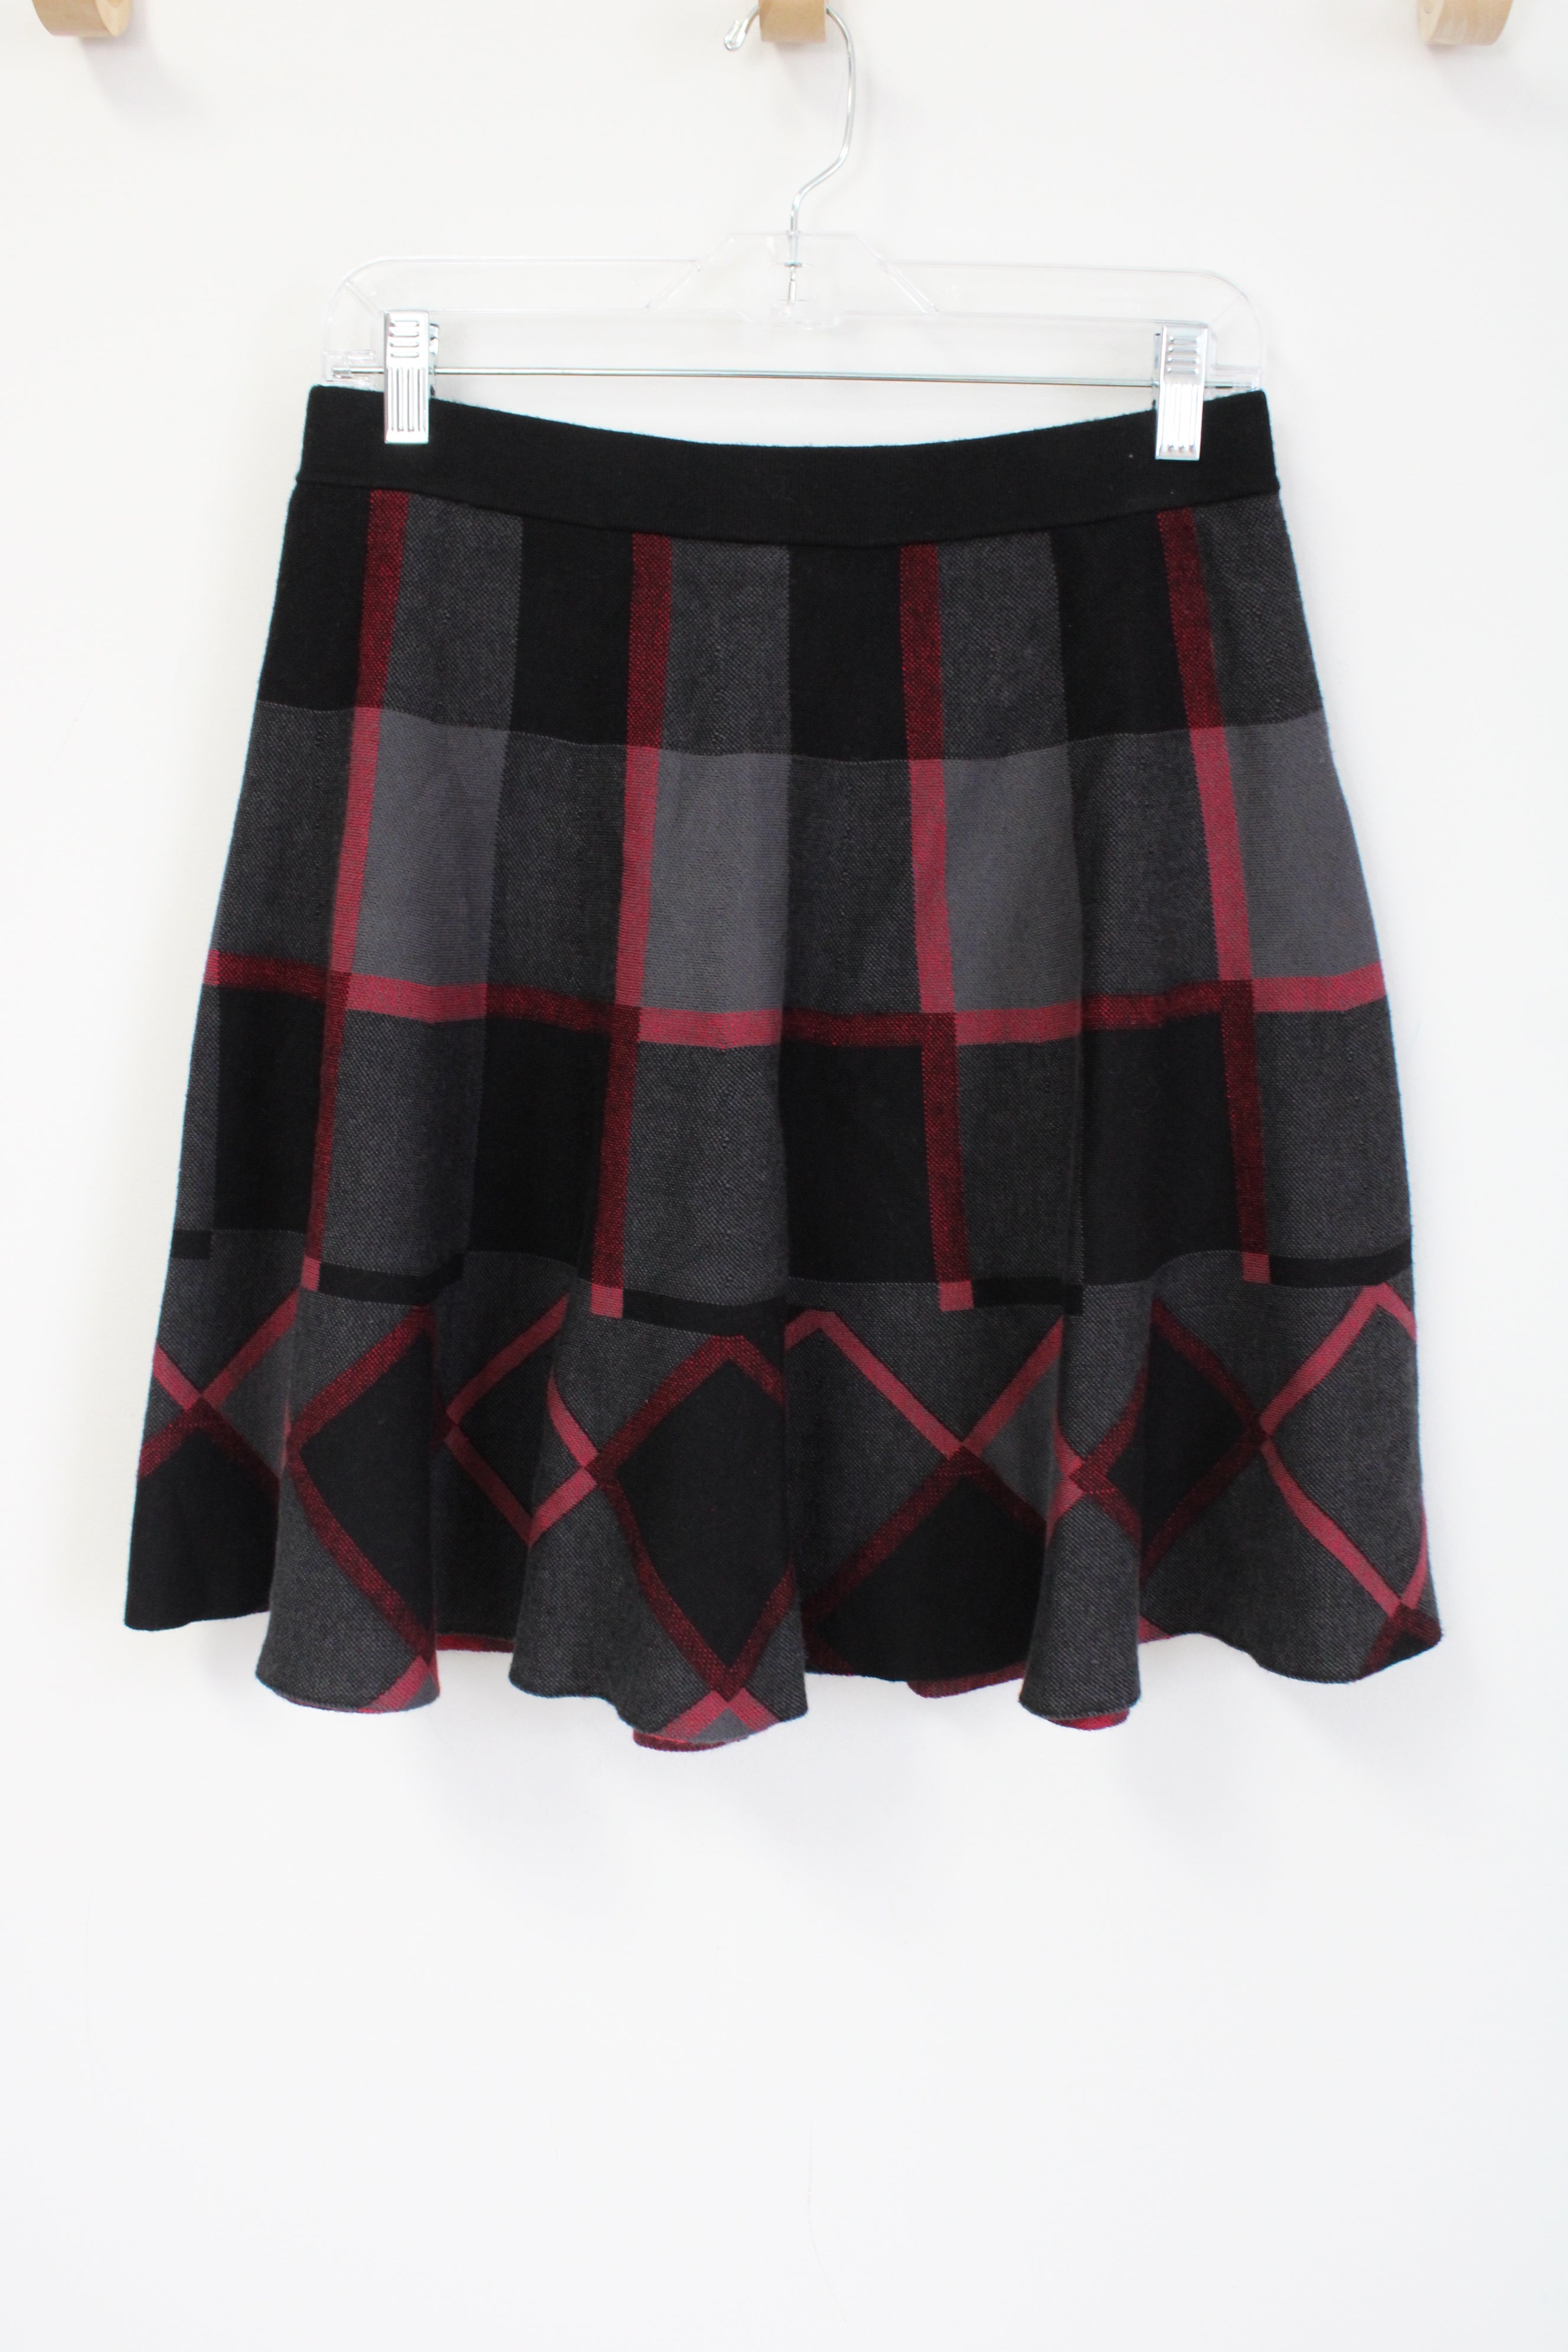 Grace Elements Black Gray Red Knit Skirt | M